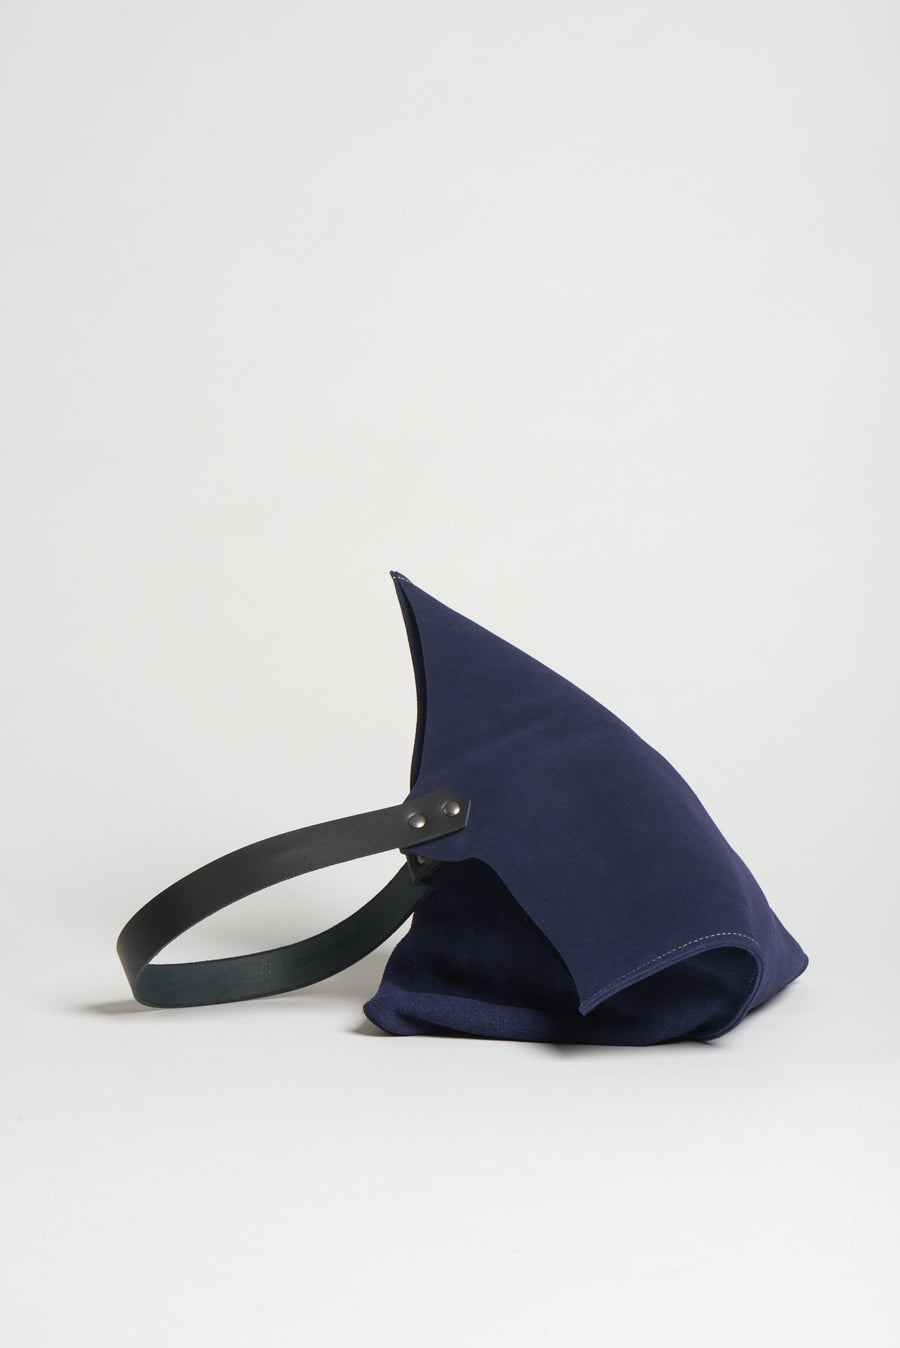 Wedge bag -  Lapis blue suede